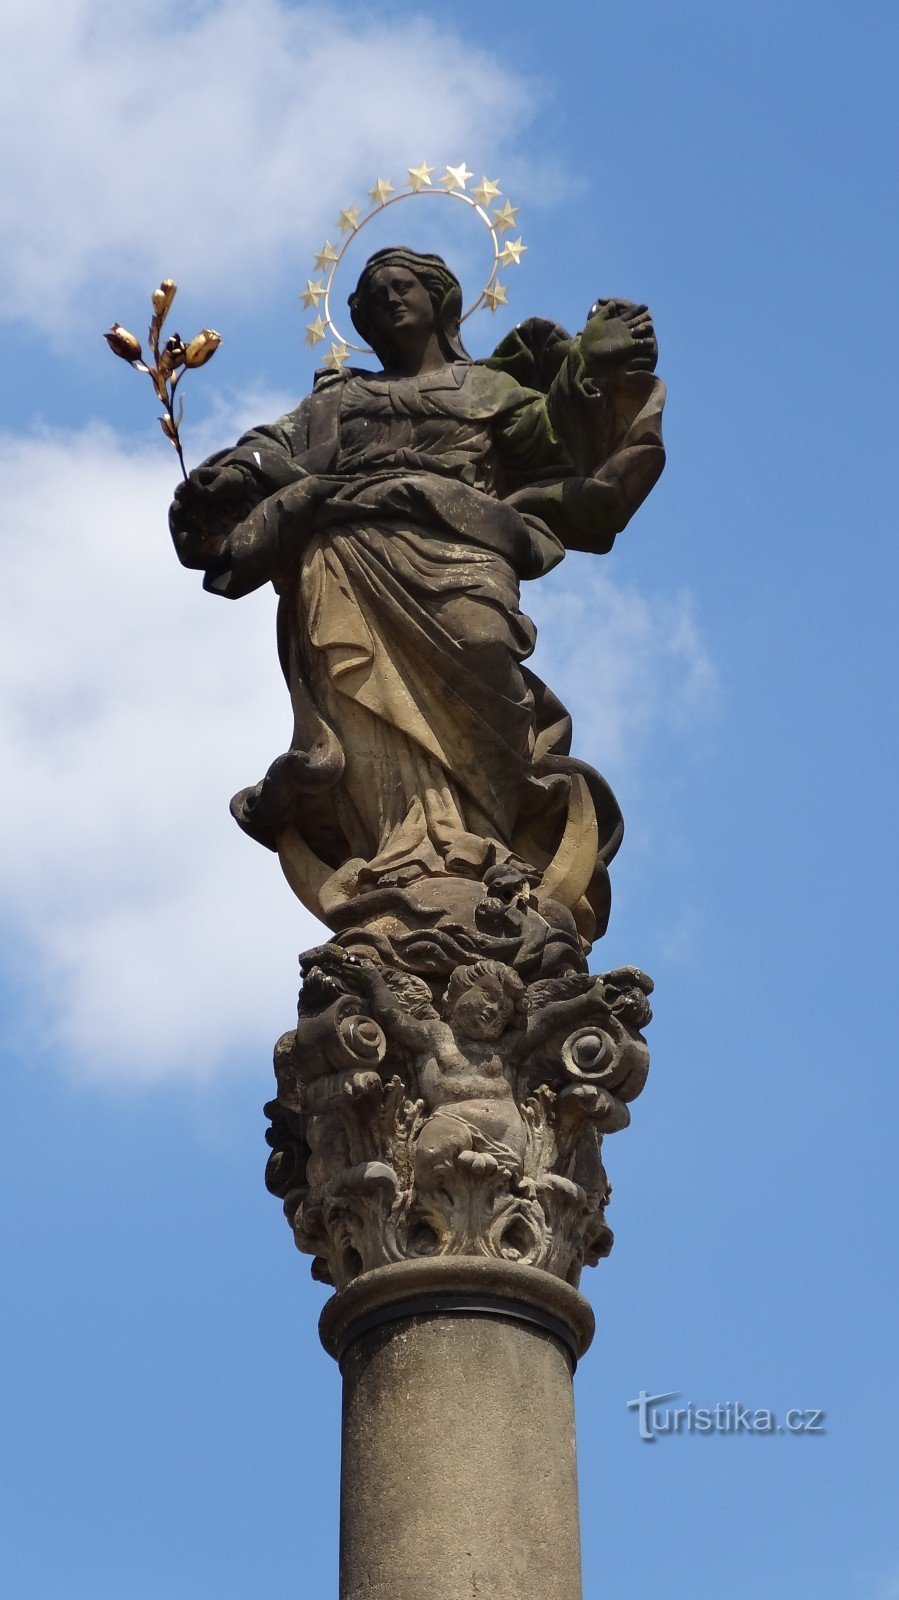 Una statua in cima a una colonna